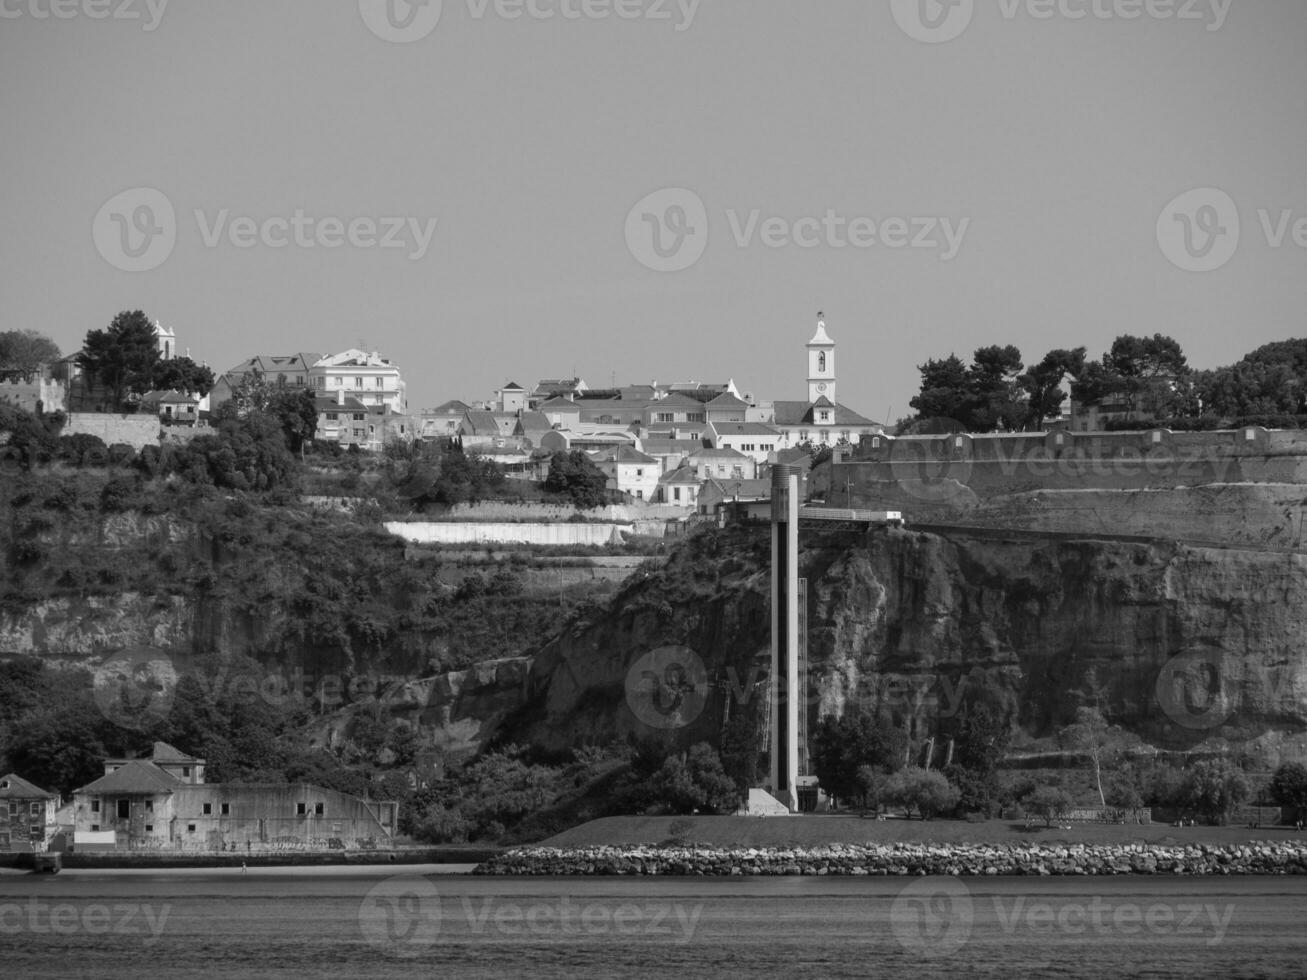 de stad Lissabon foto